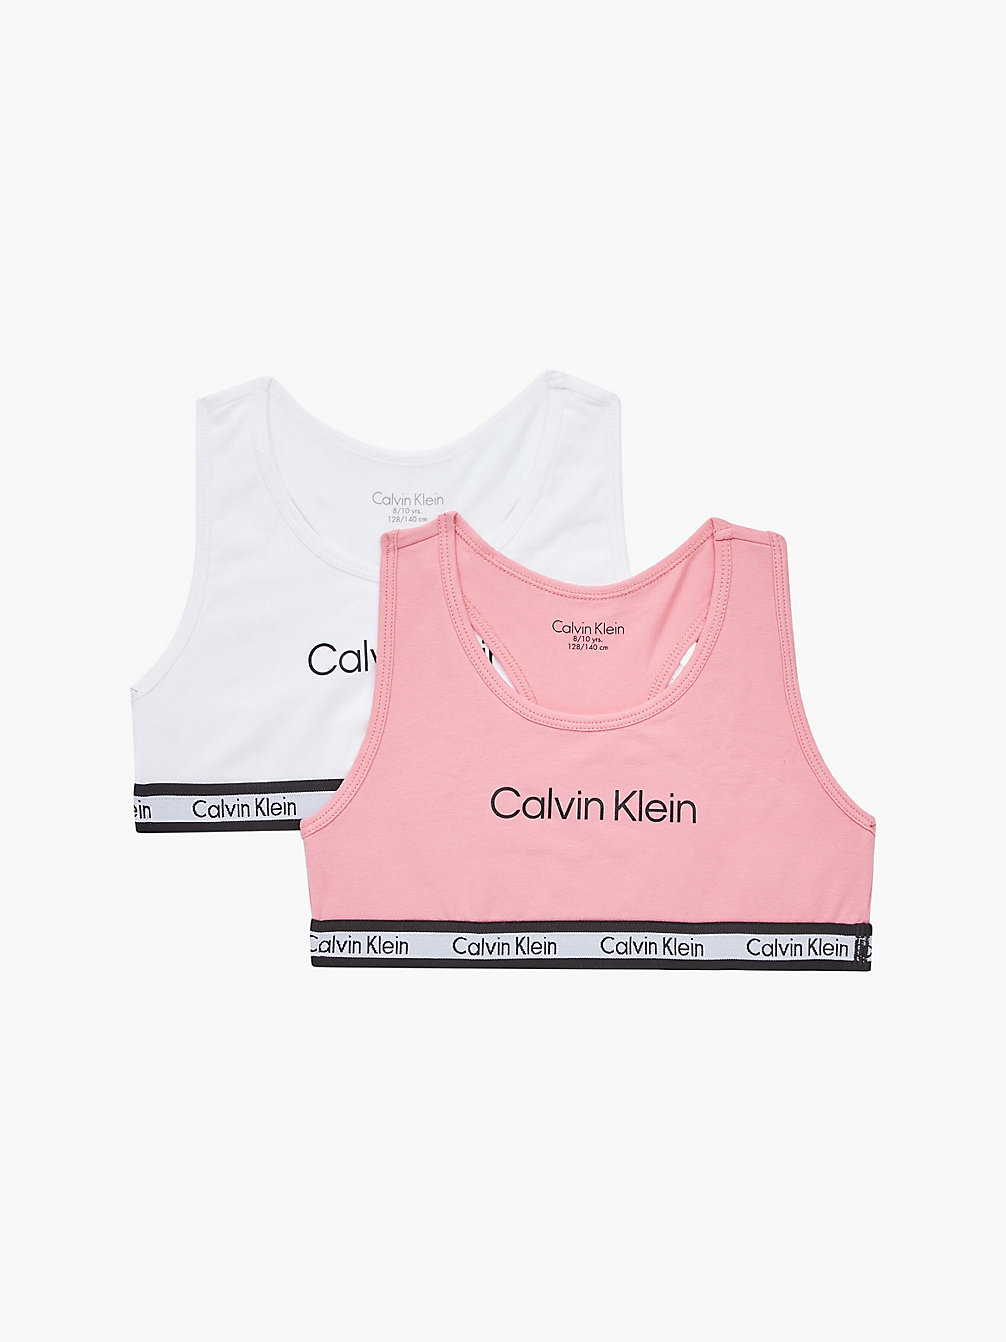 ROSEYPINK/PVHWHITE > 2-Pack Meisjesbralettes - Modern Cotton > undefined girls - Calvin Klein